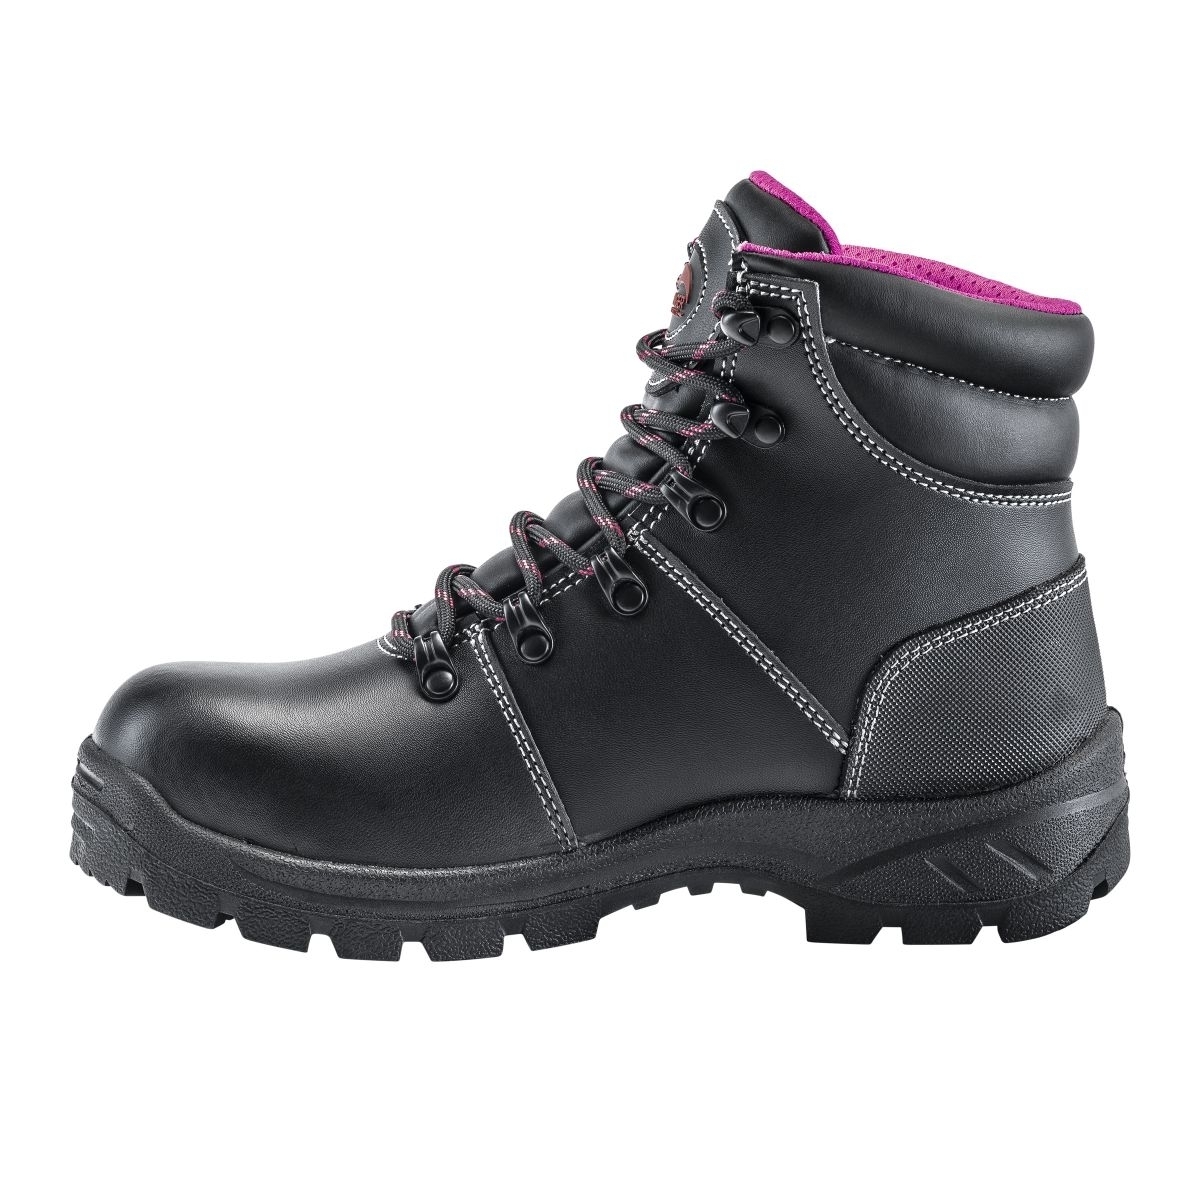 FSI FOOTWEAR SPECIALTIES INTERNATIONAL NAUTILUS Avenger Women's 6 Builder Steel Toe Waterproof EH Work Boots Black - A8124 BLACK - BLACK, 7